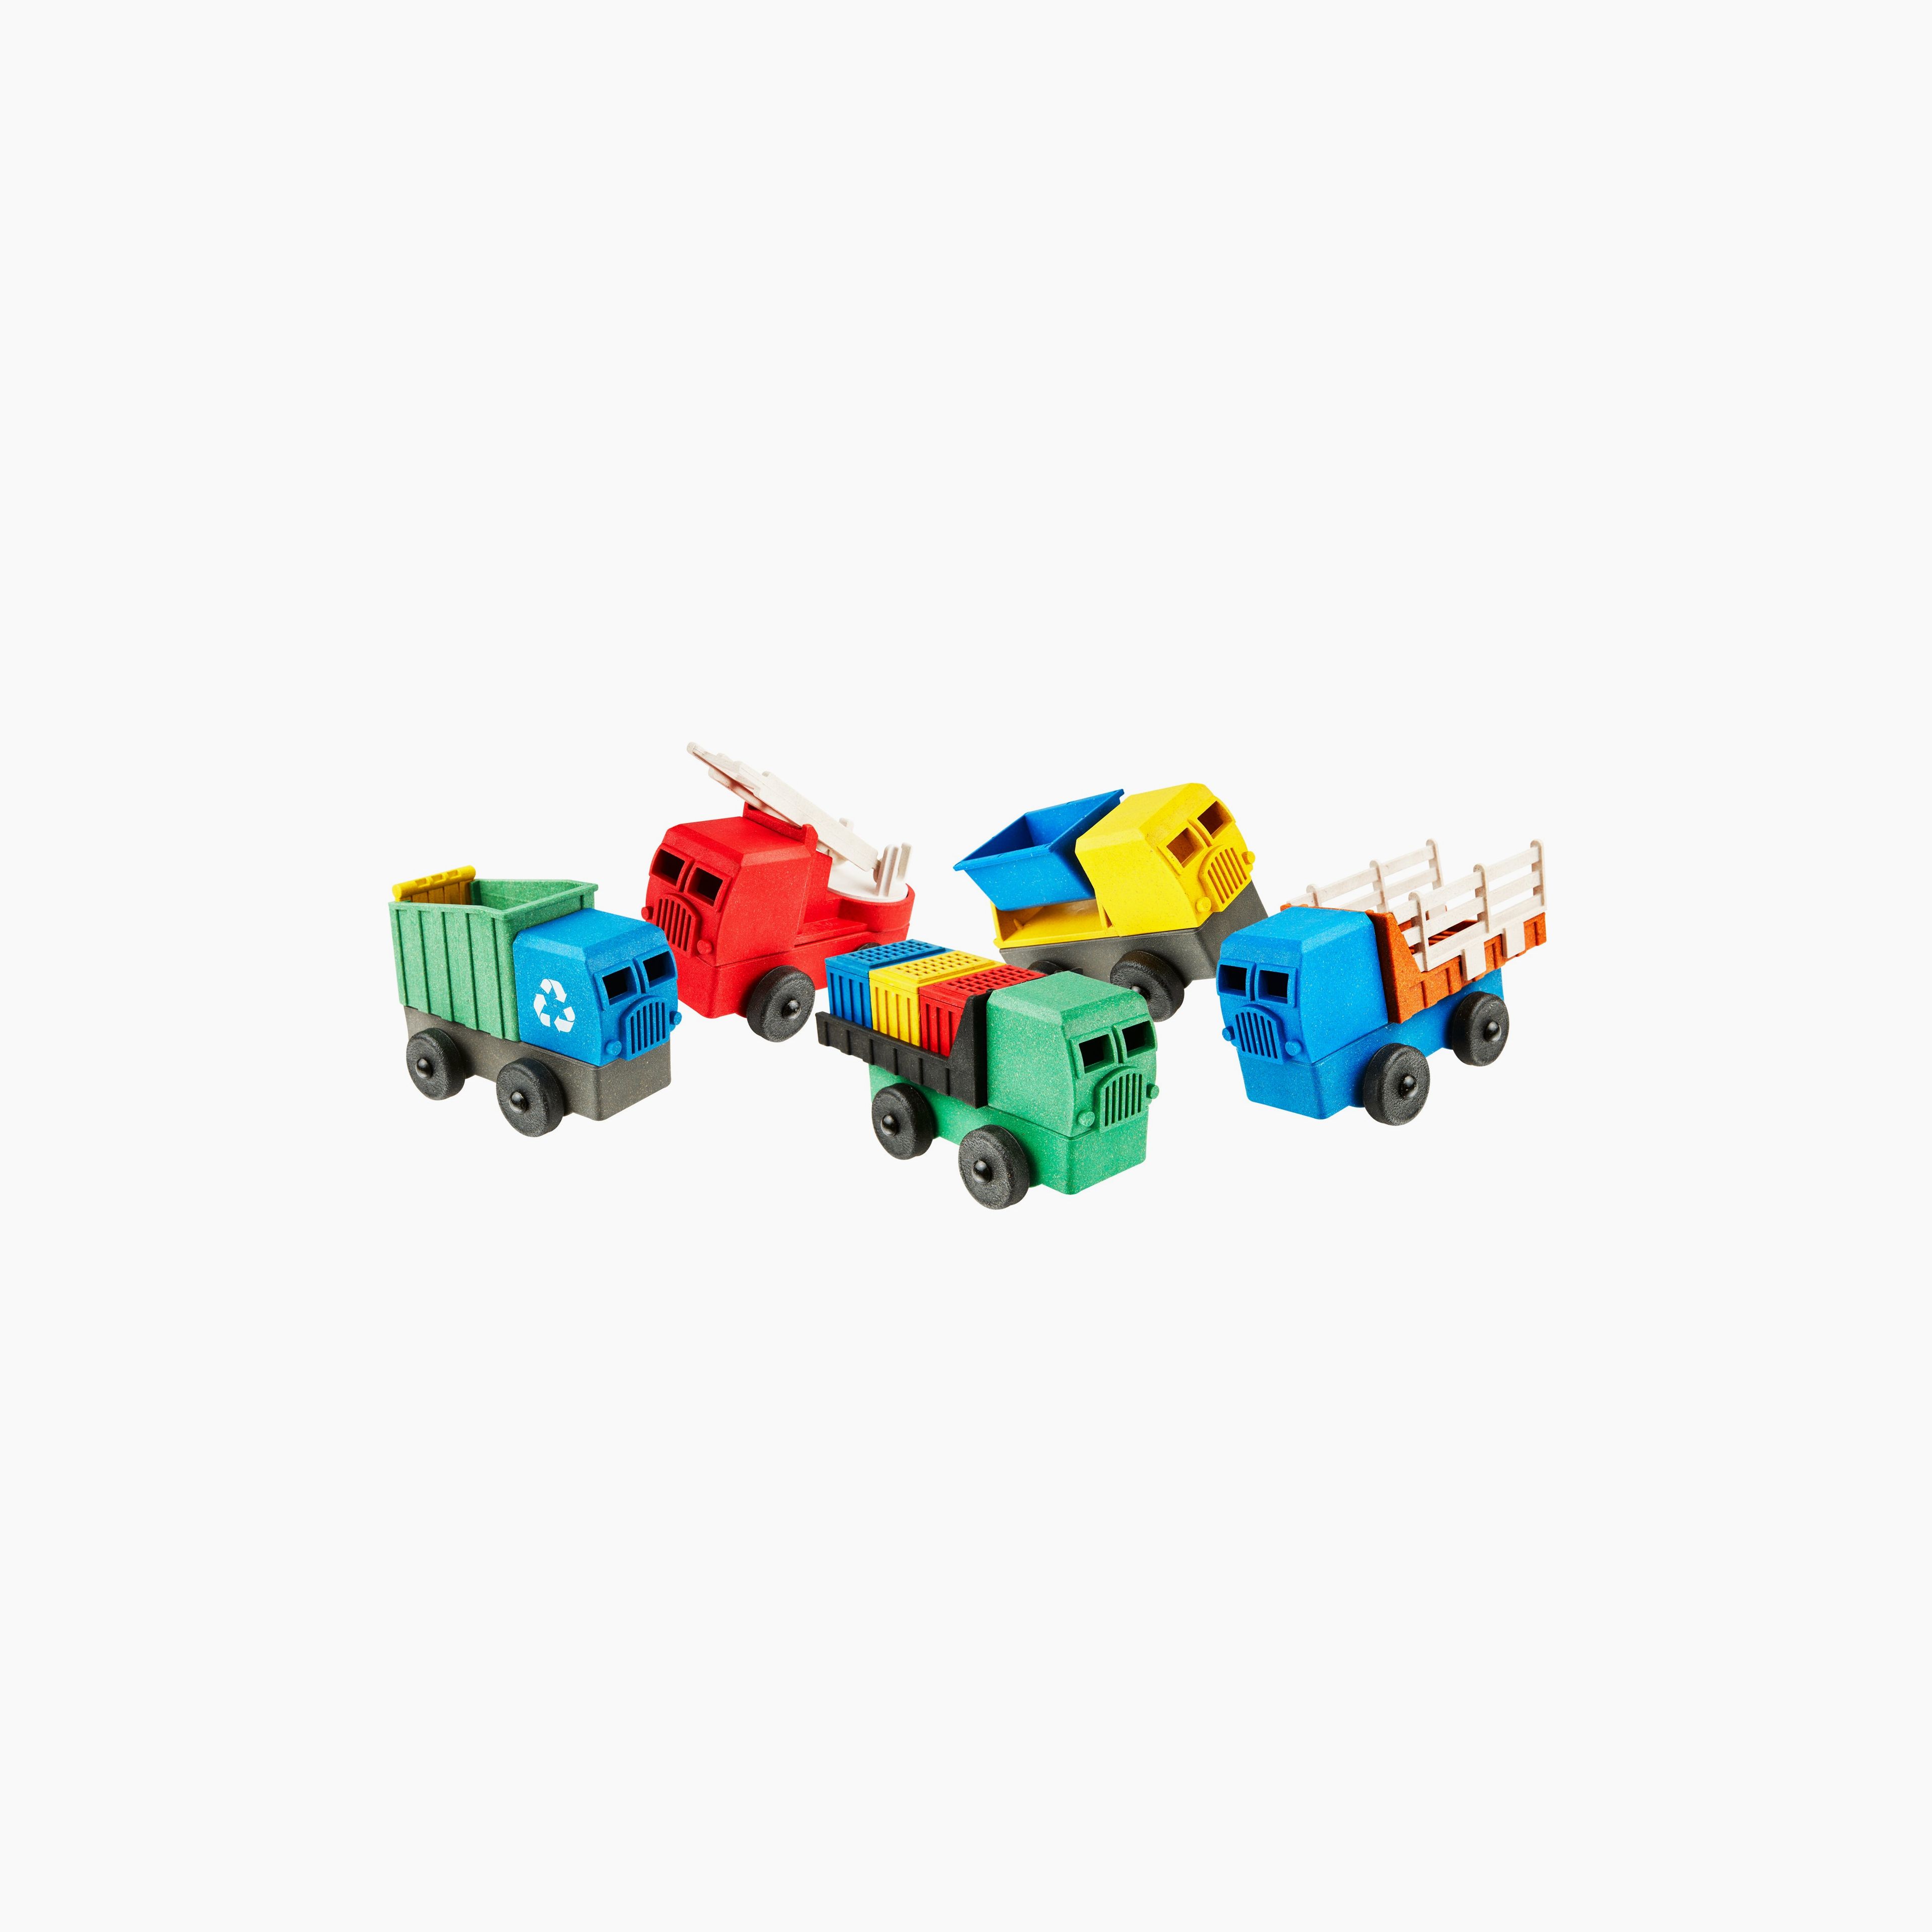 Five-Pack: Luke's Big Box of Toy Trucks